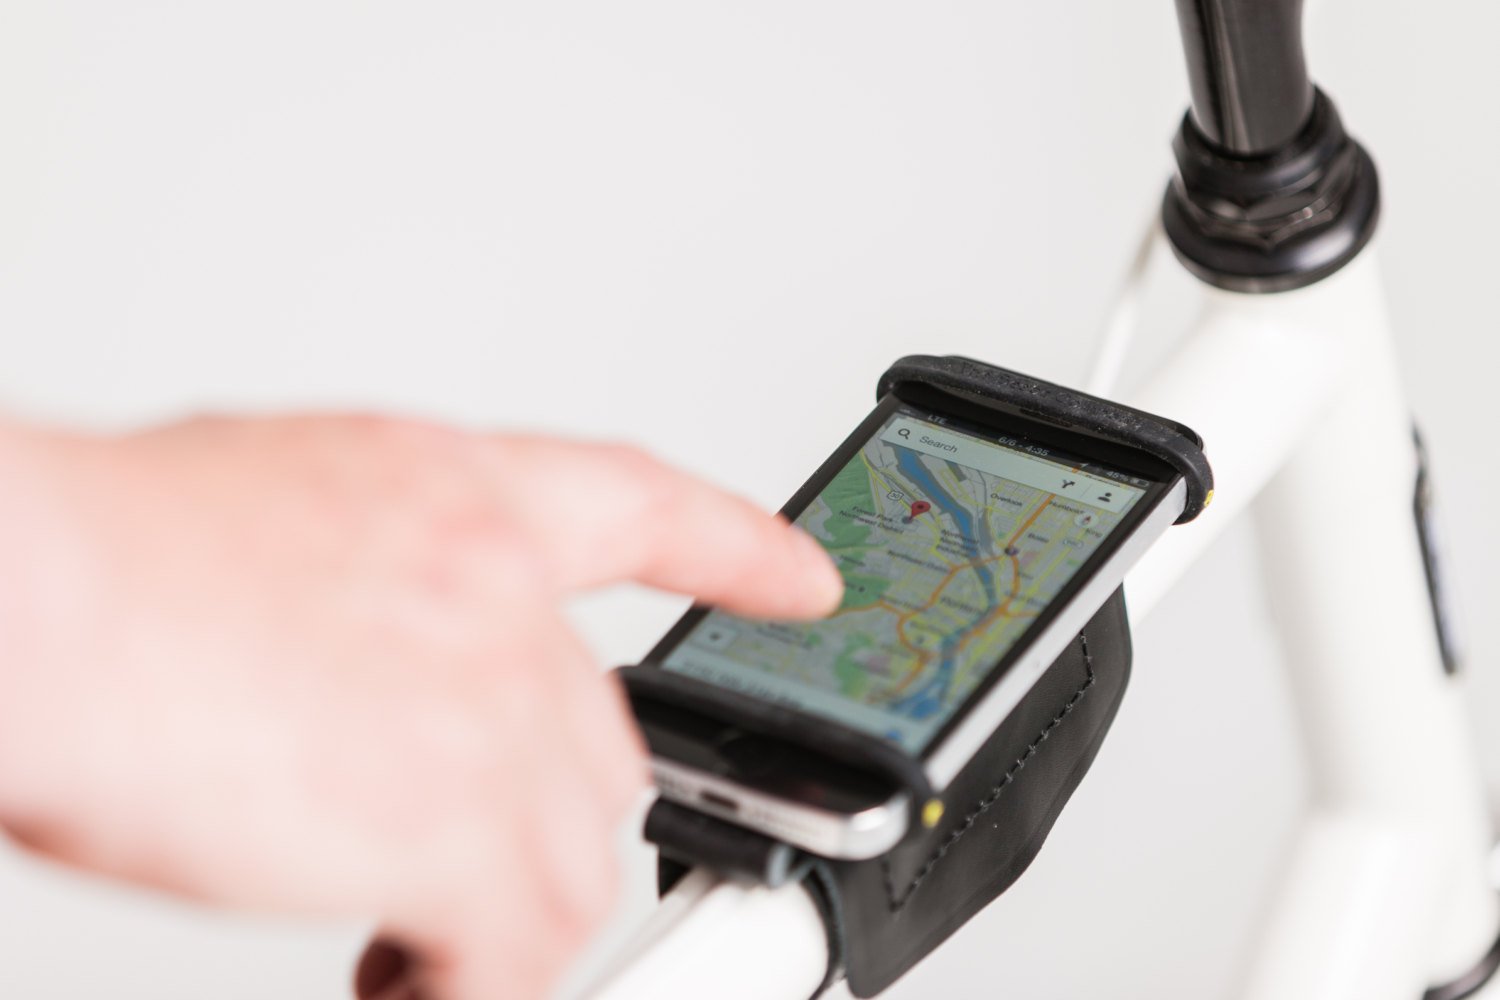 Universal Bike Phone Mount Holder - Zoom Electric Bikes